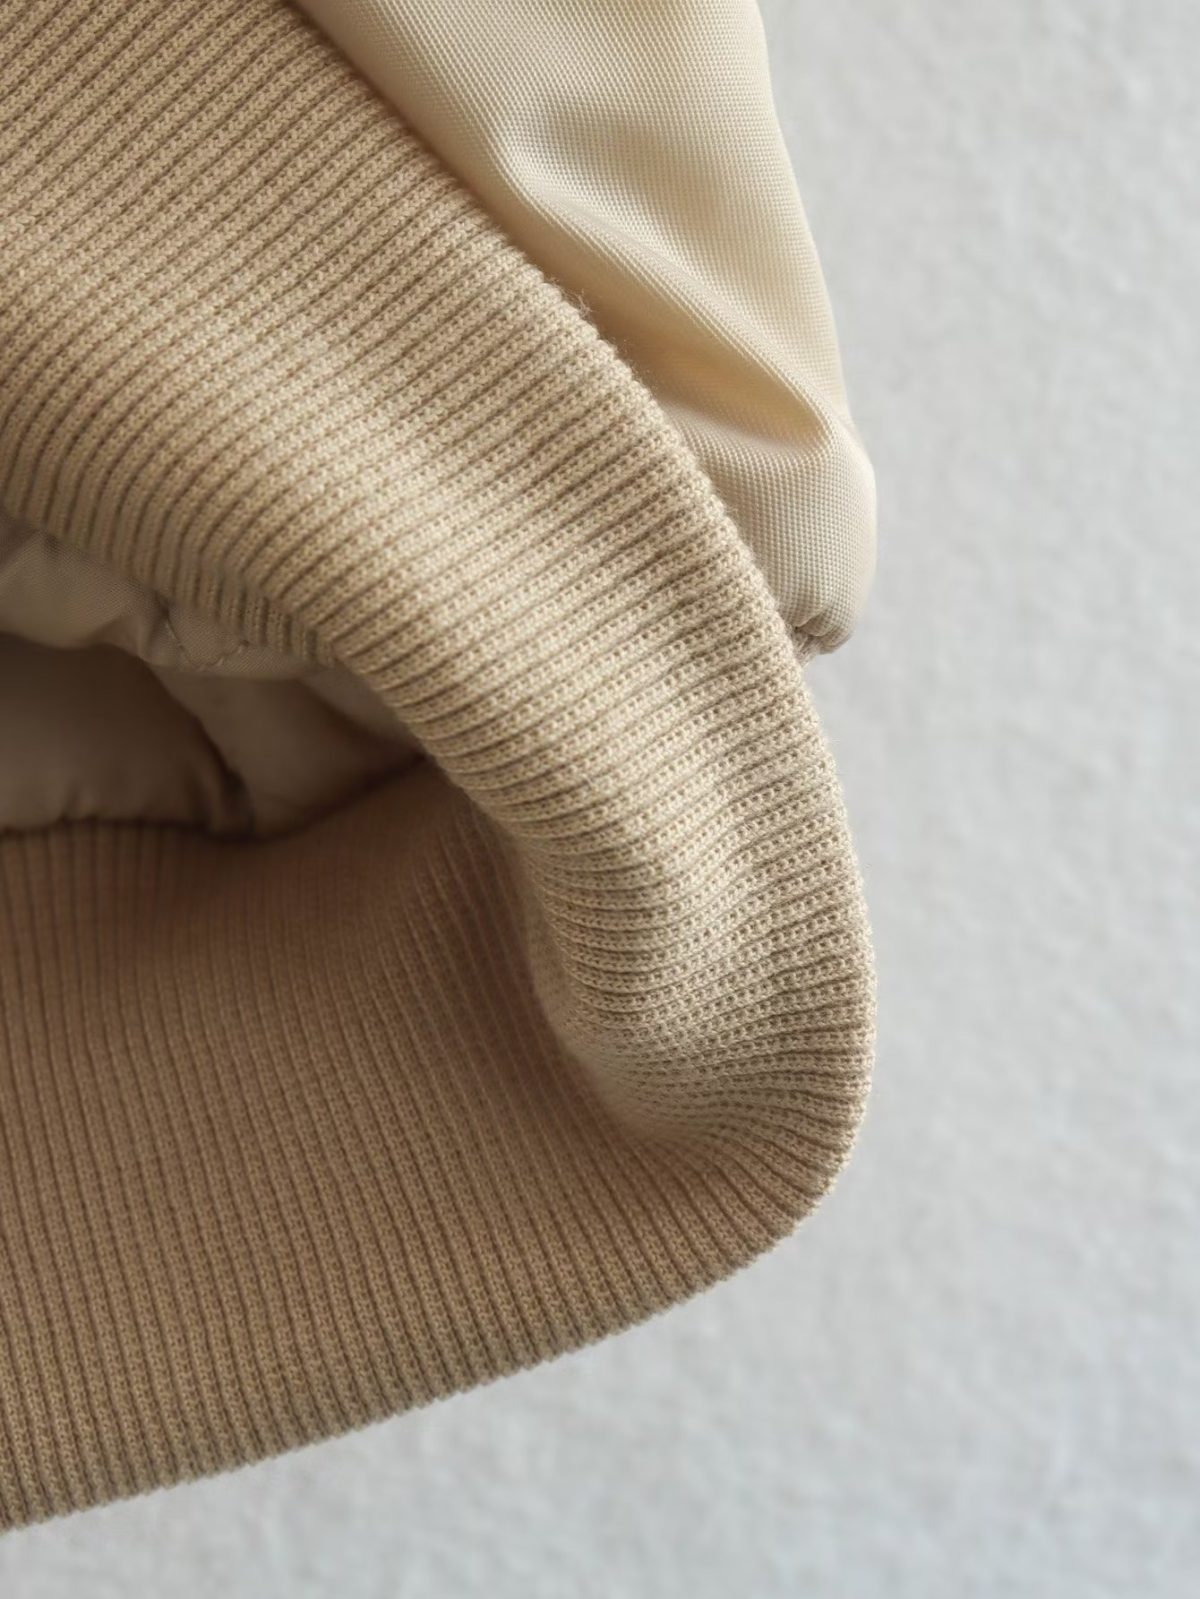 Winter Khaki Pleated Sleeve Zipper Cotton Padded Jacket - Coats & Jackets - Uniqistic.com